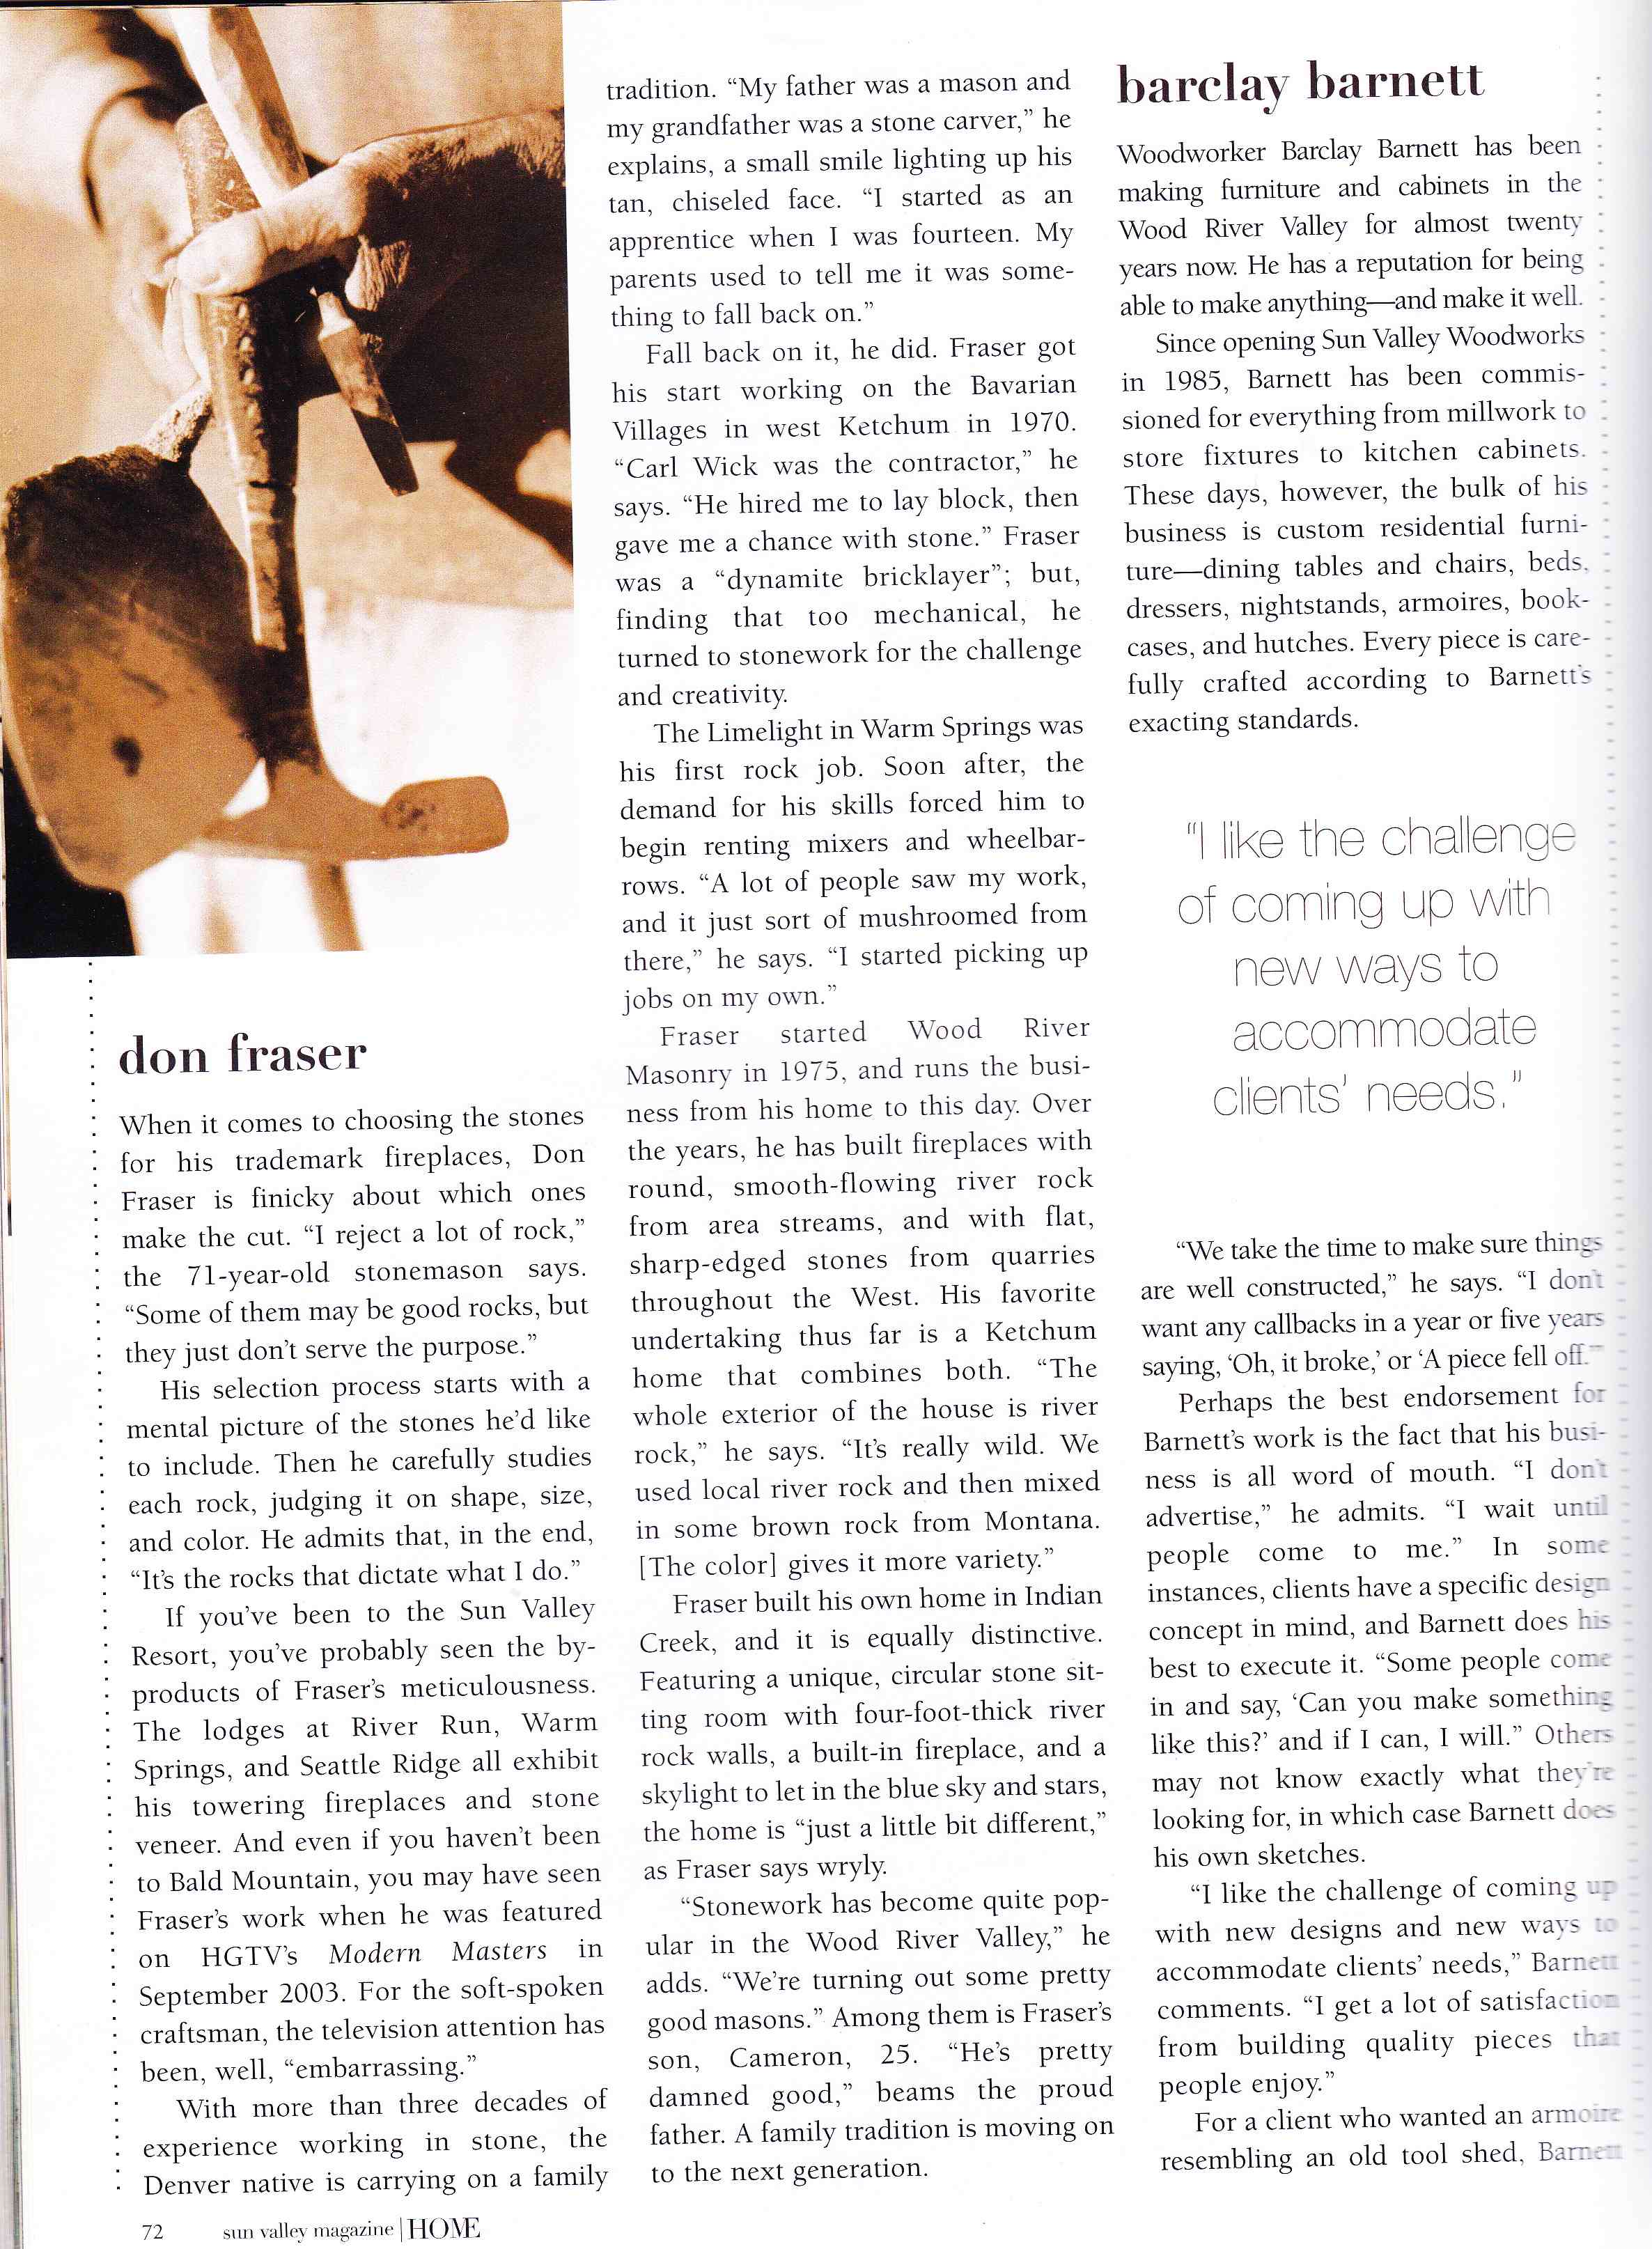 SV Magazine, second page